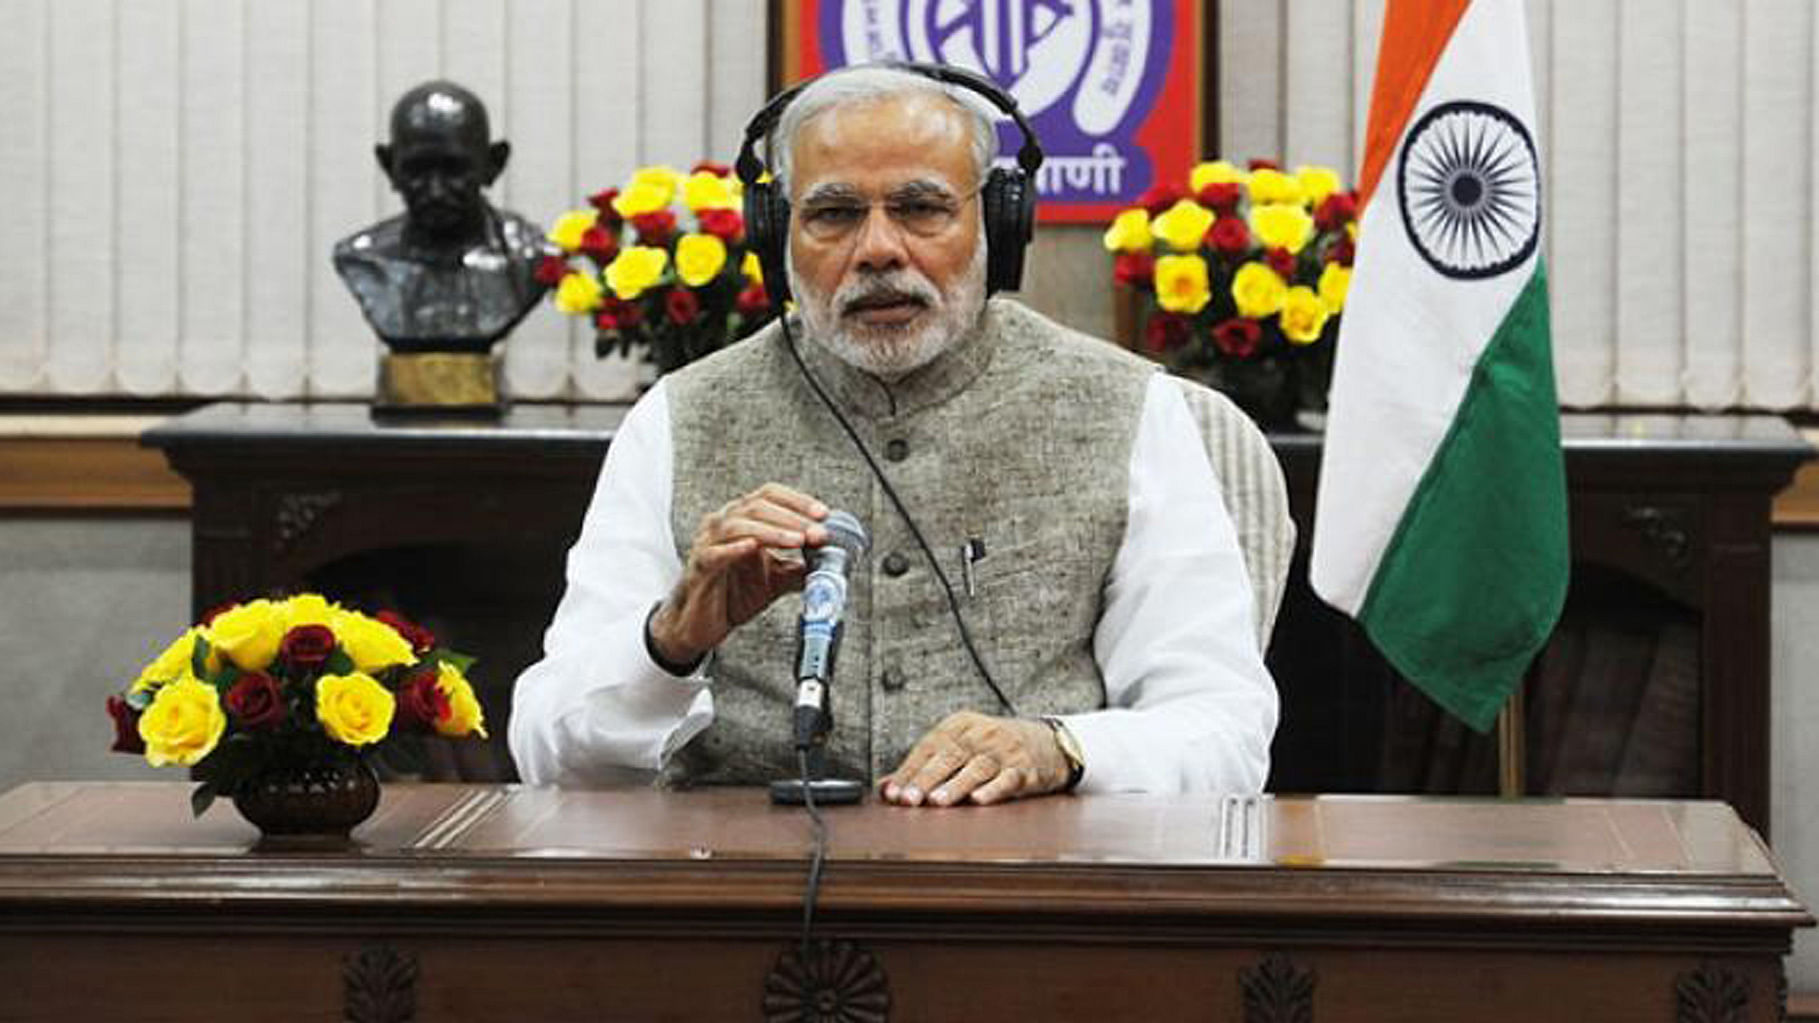 Prime Minister Narendra Modi addressing people on his radio programme ‘Mann Ki Baat’. (File photo)